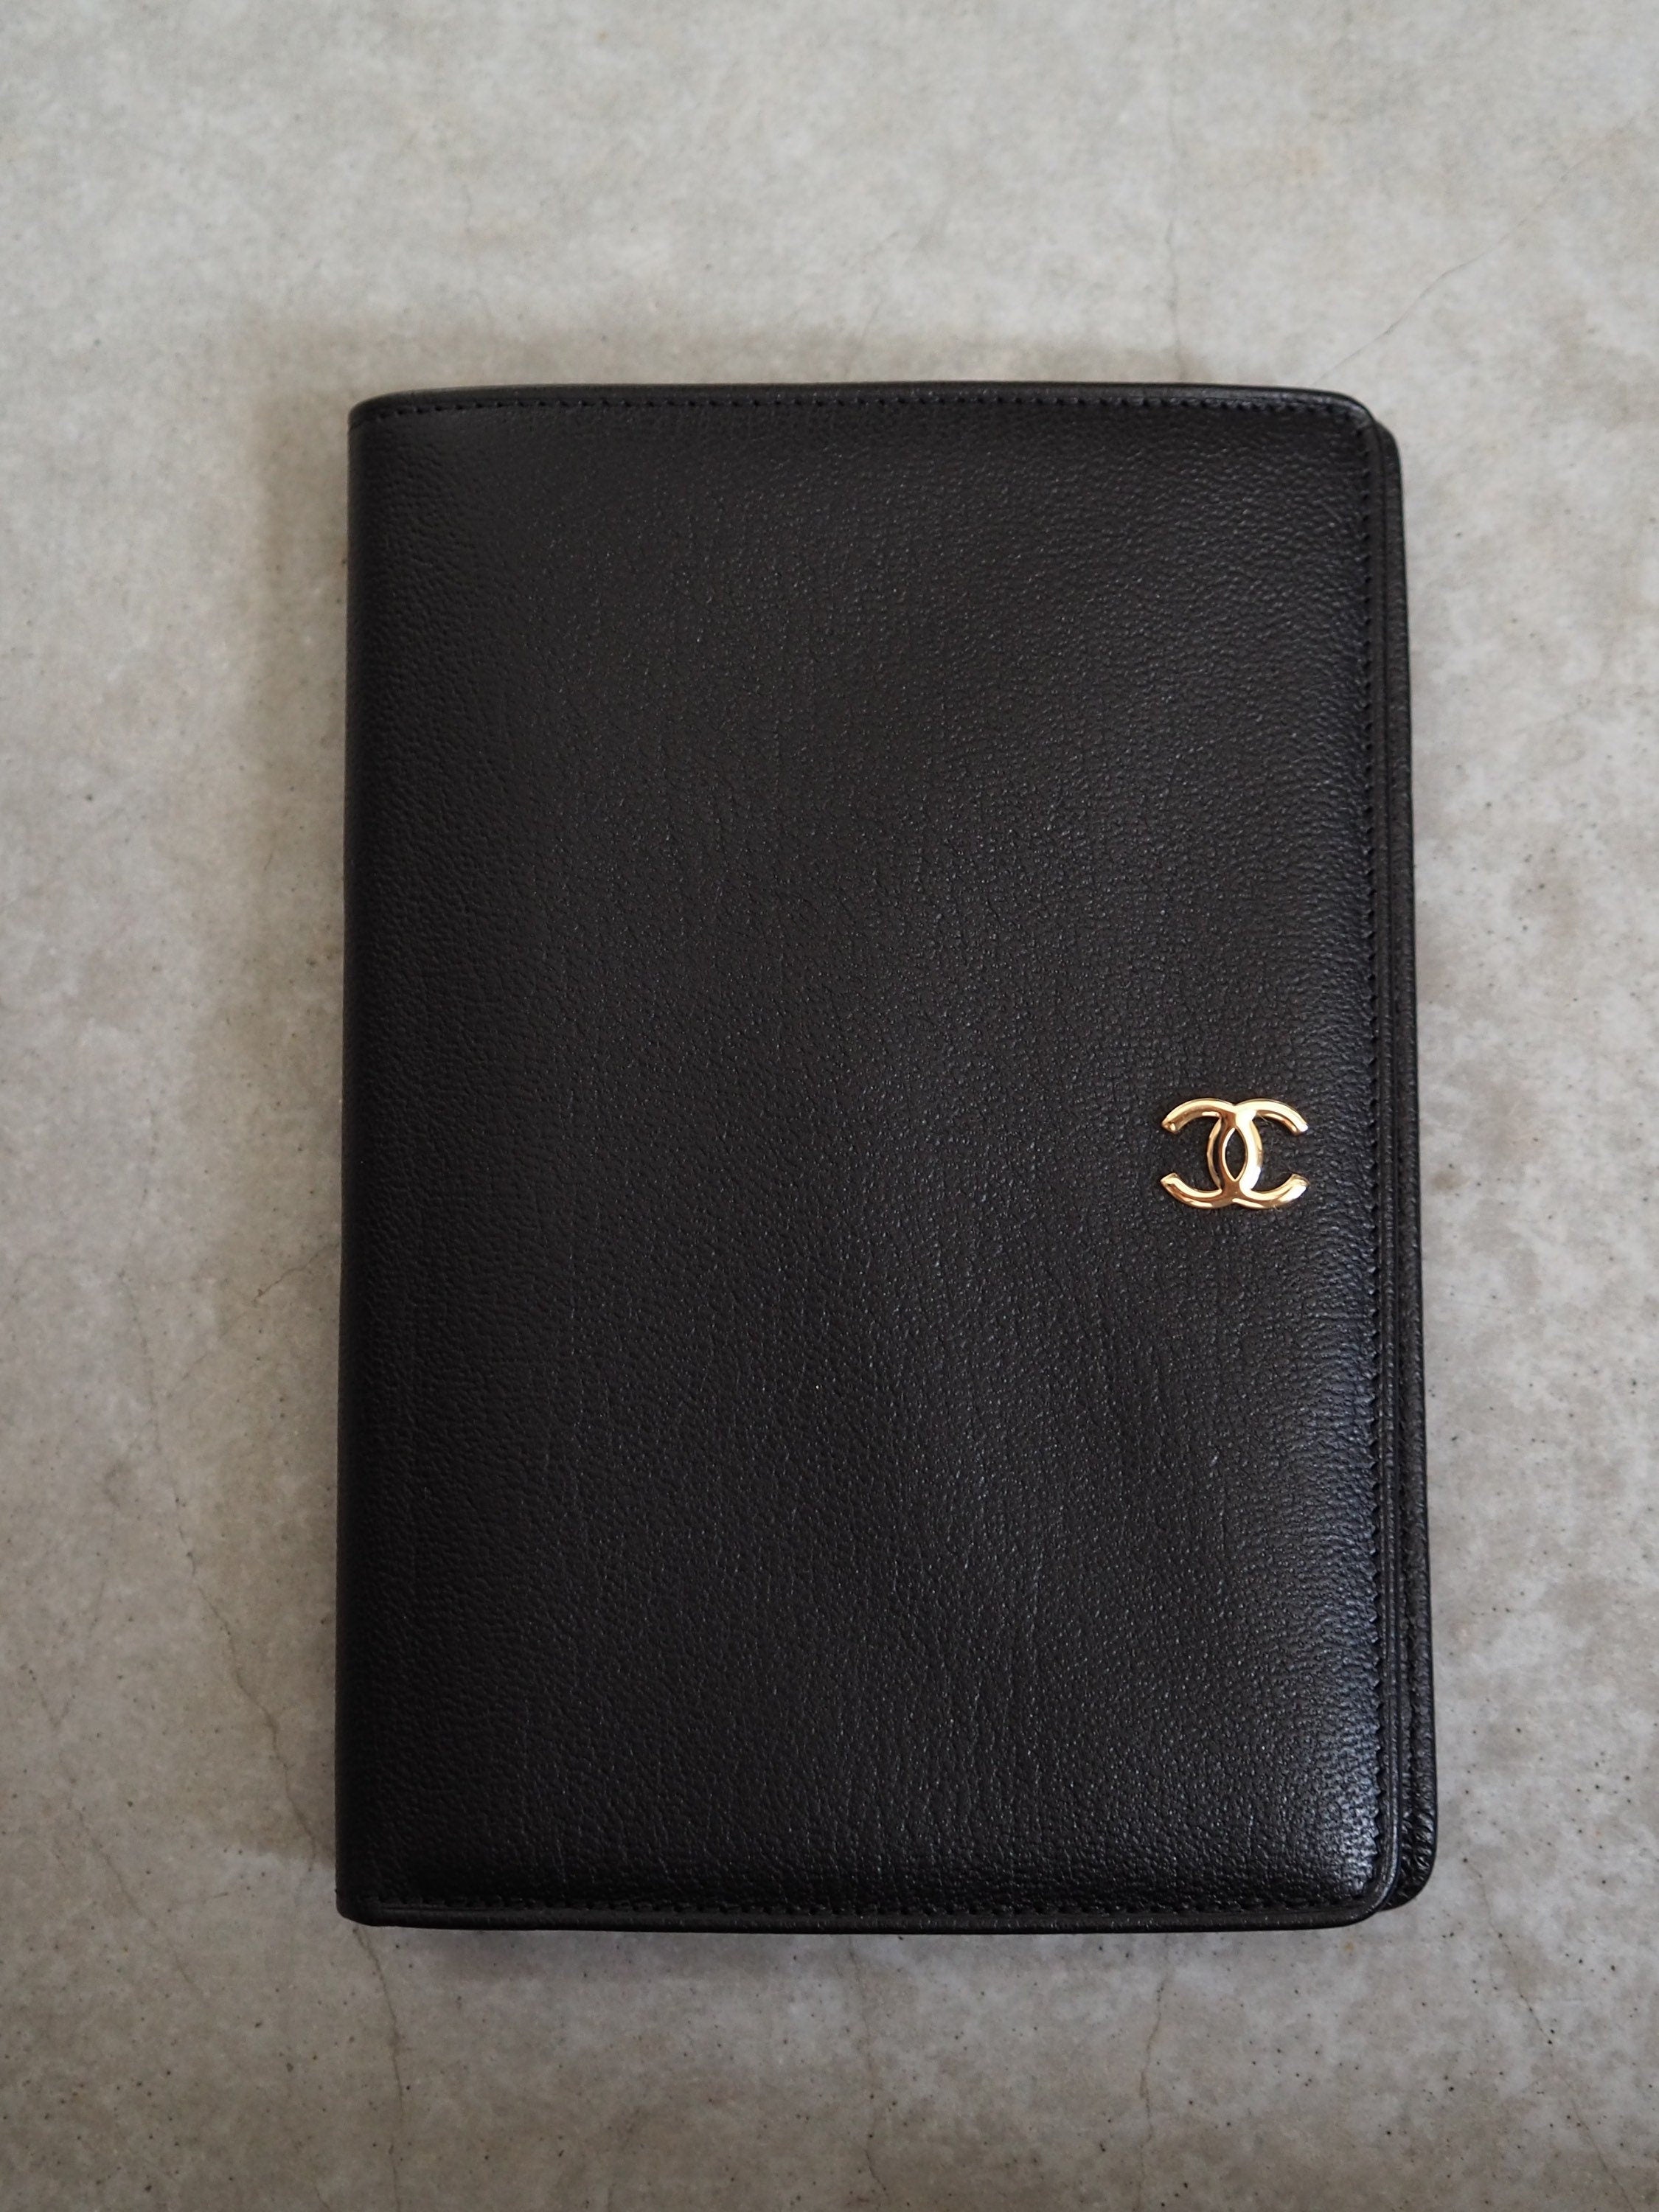 CHANEL COCO Wallet Compact Purse CC Leather Black Authentic Vintage Box